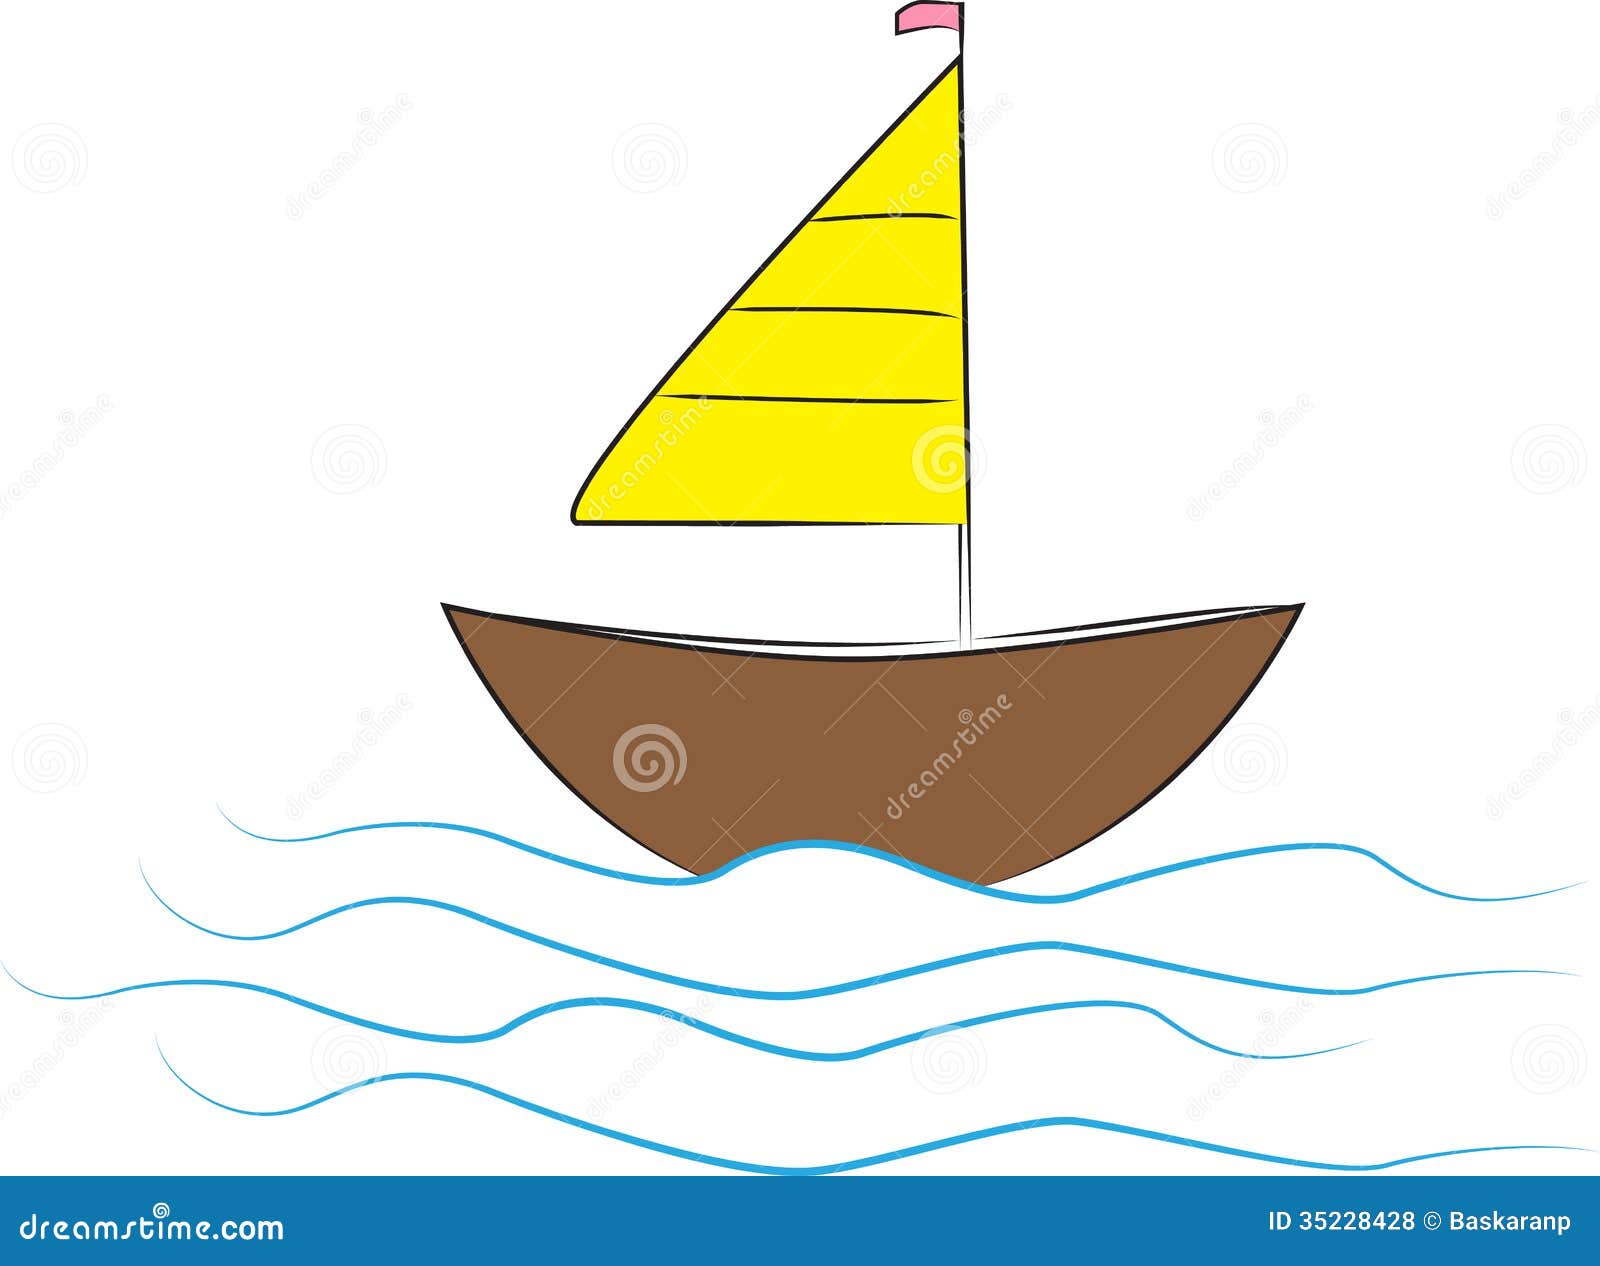 boat illustrations clipart - photo #3